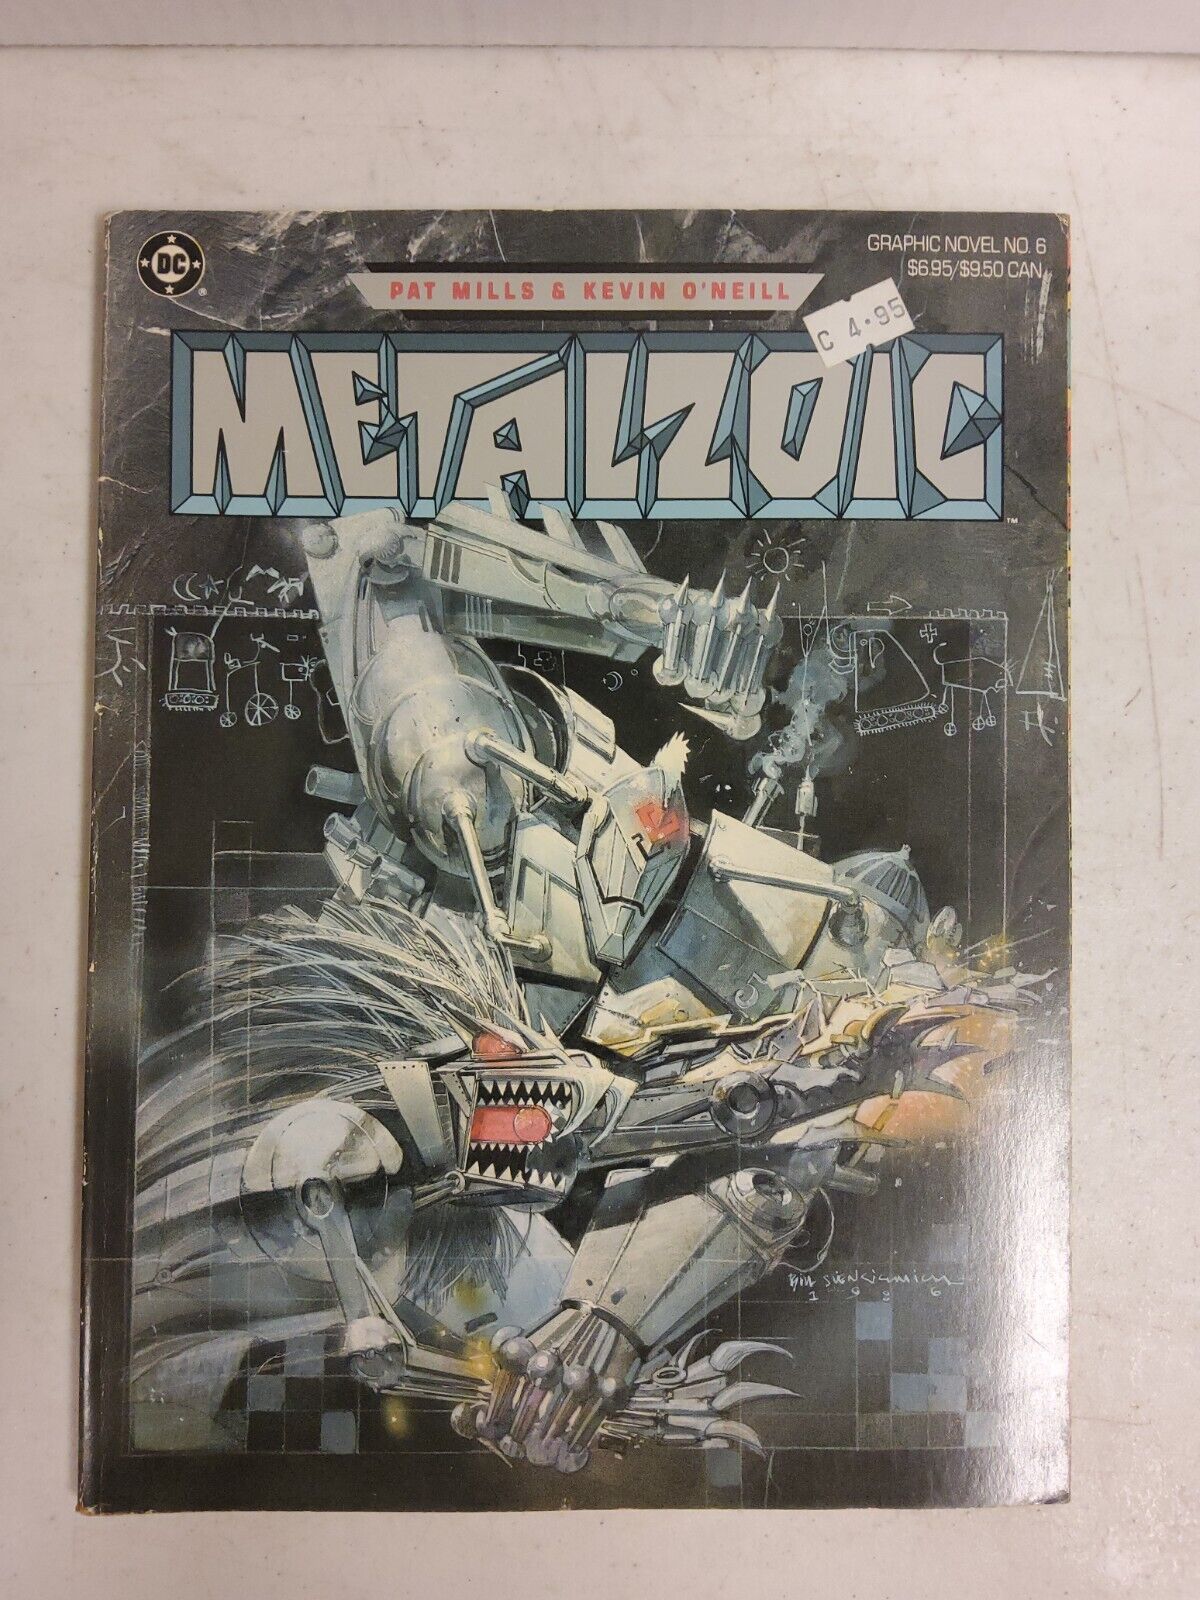 DC Graphic Novel #6 - Metalzoic 1986 Bill Sienkiewicz Cover - Kevin O'Neill Art